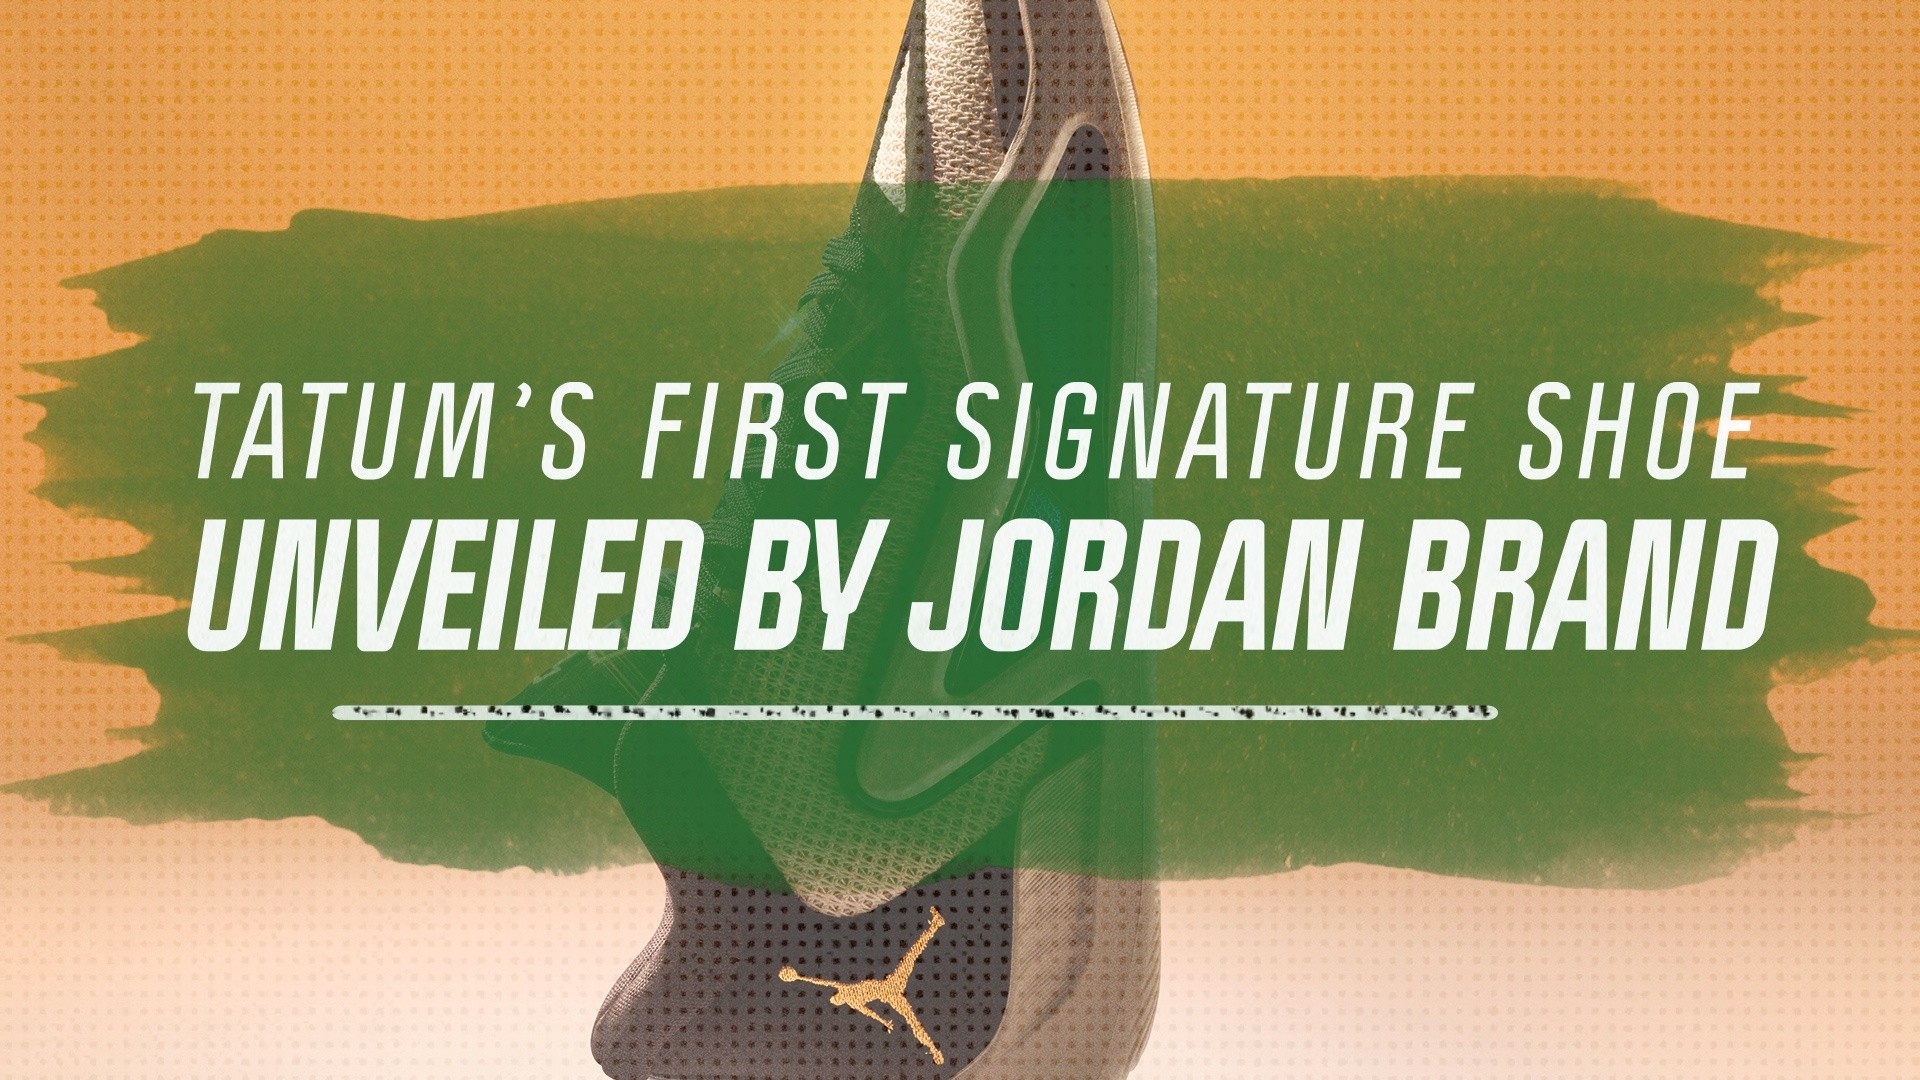 Jayson Tatum Provided Update on Jordan Brand Signature Shoe